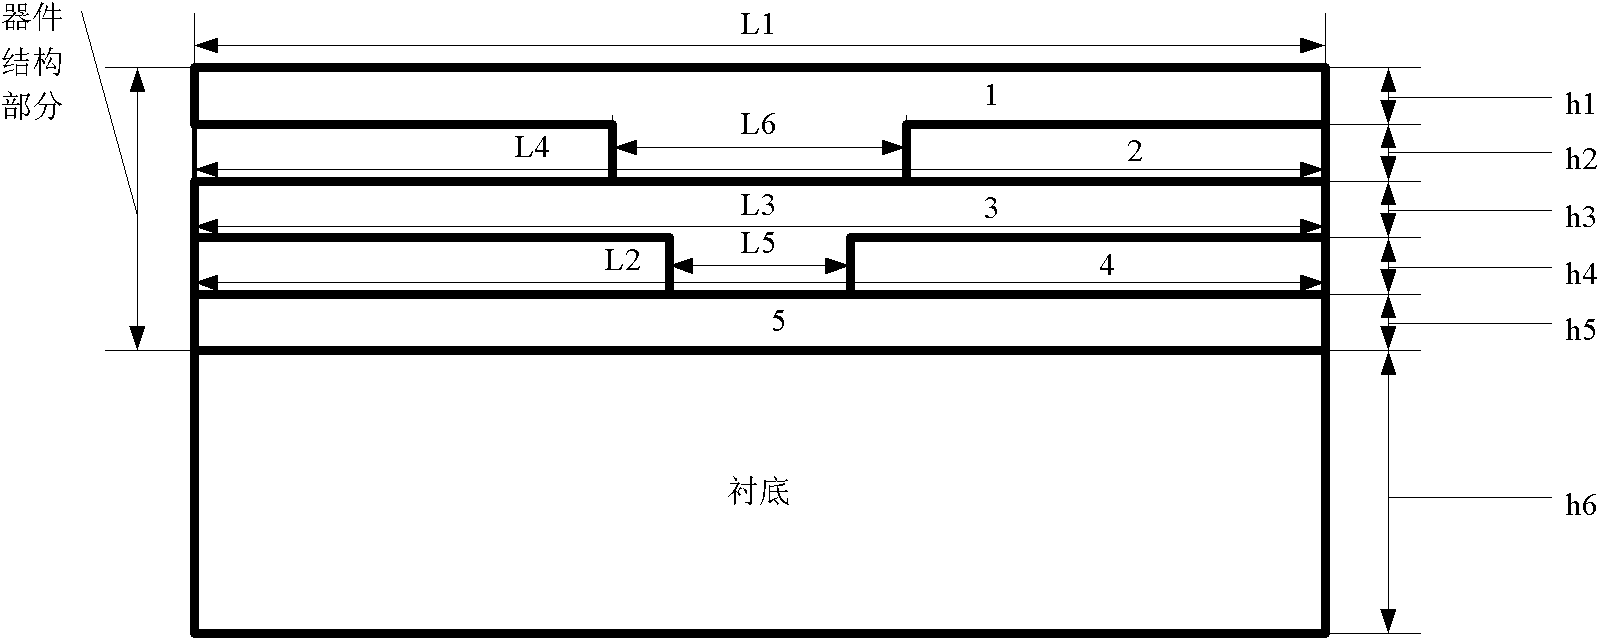 Asymmetric phase-change memory unit and element